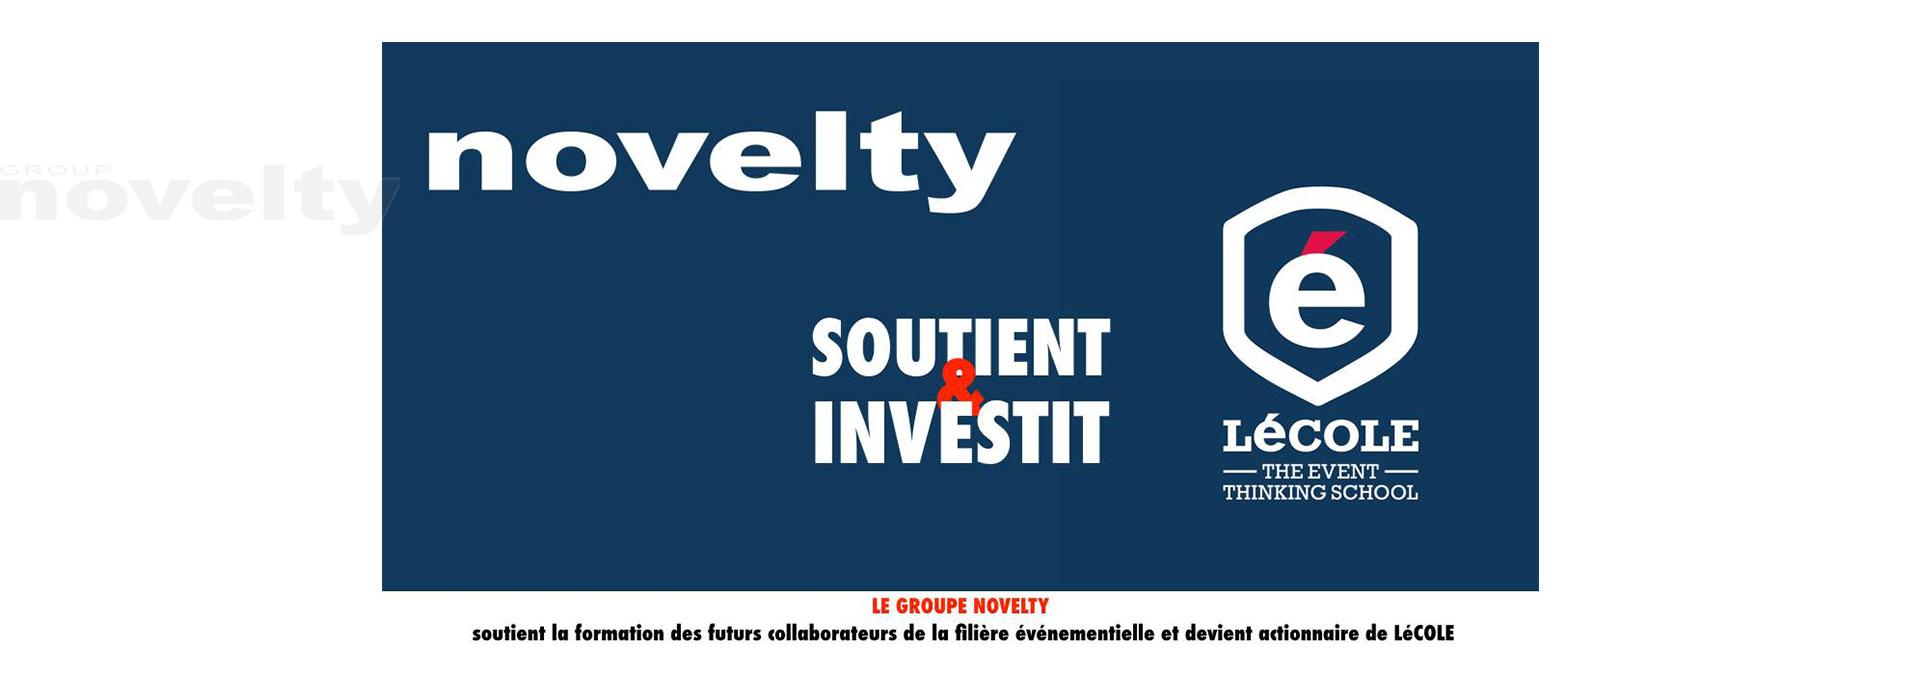 Visuel NOVELTY investit & soutient LéCOLE | The event thinking school